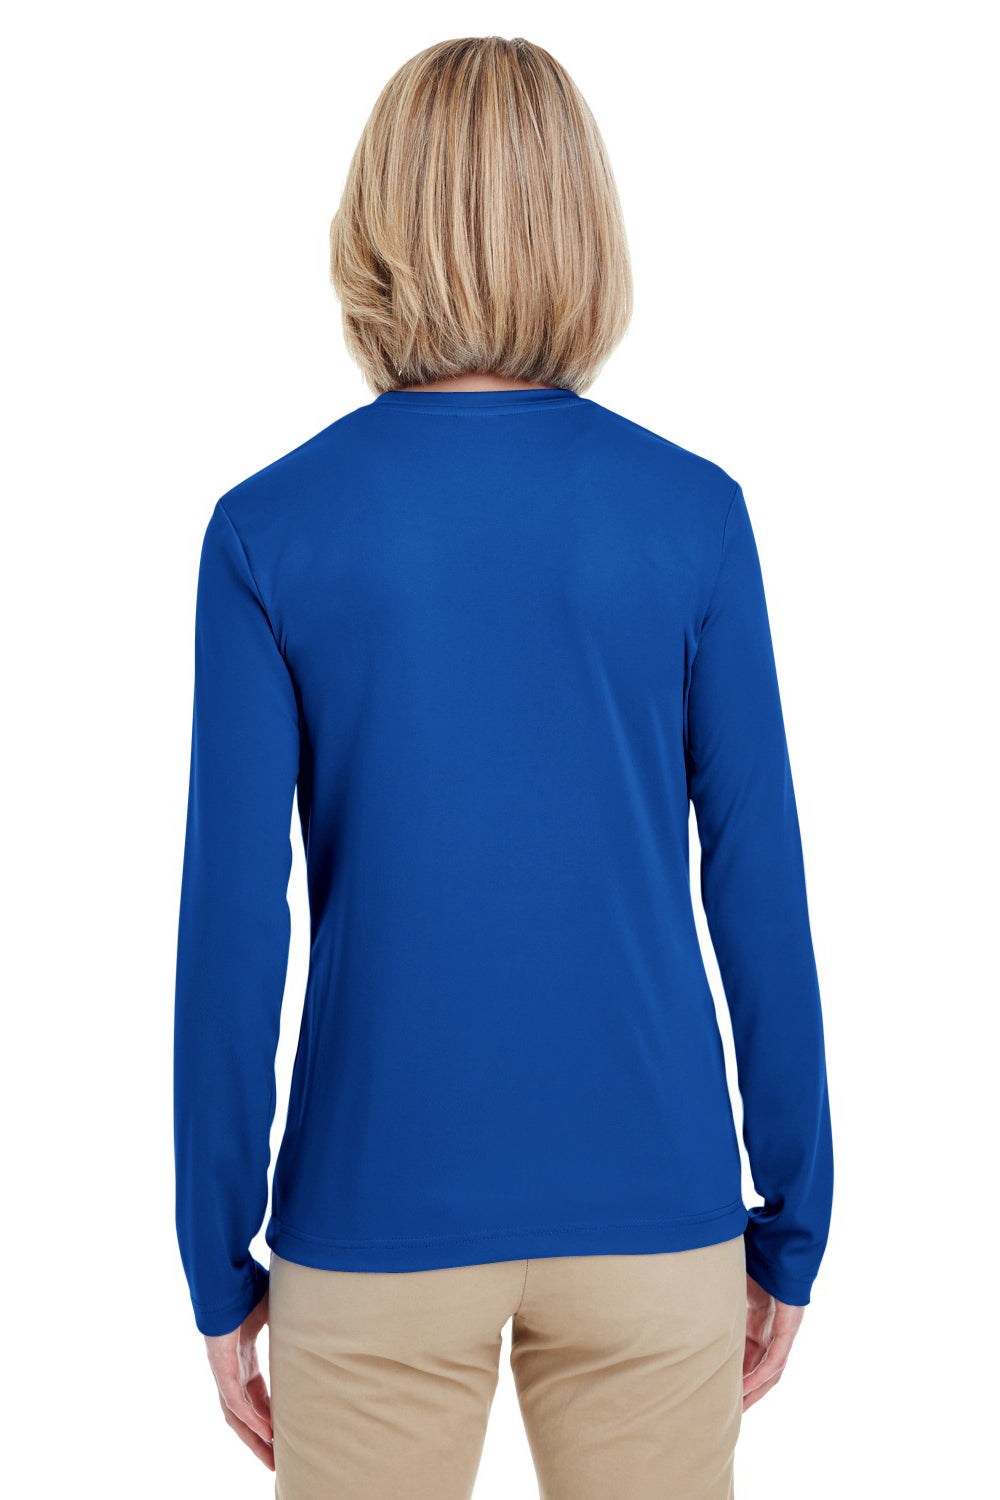 UltraClub 8622W Womens Cool & Dry Performance Moisture Wicking Long Sleeve Crewneck T-Shirt Royal Blue Back